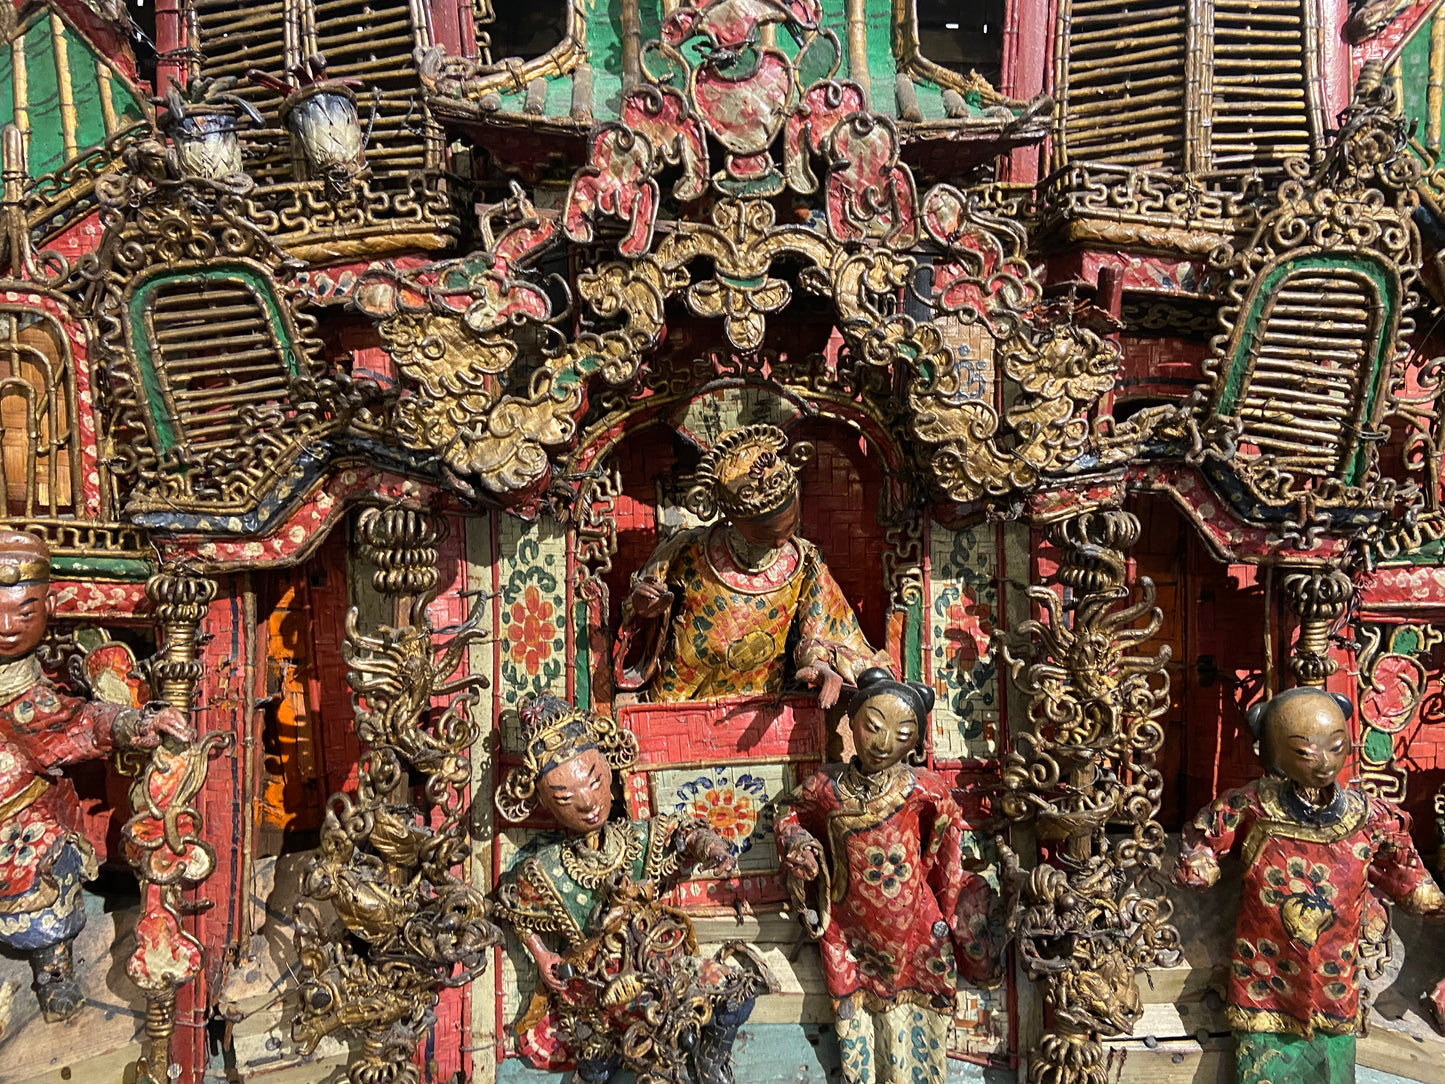 Antique Chinese Puppet Diorama